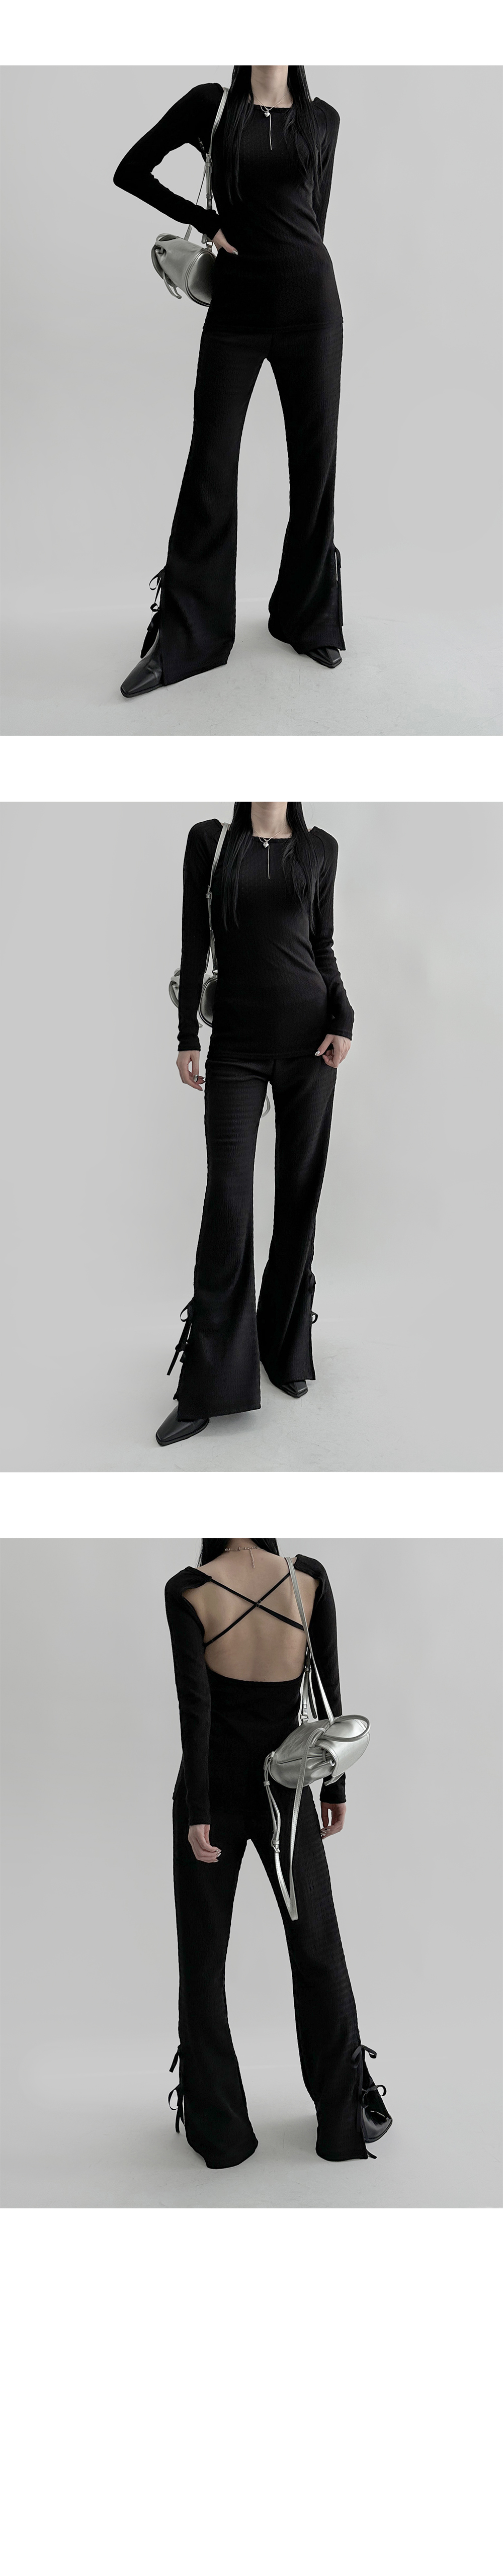 suspenders skirt/pants white color image-S1L6